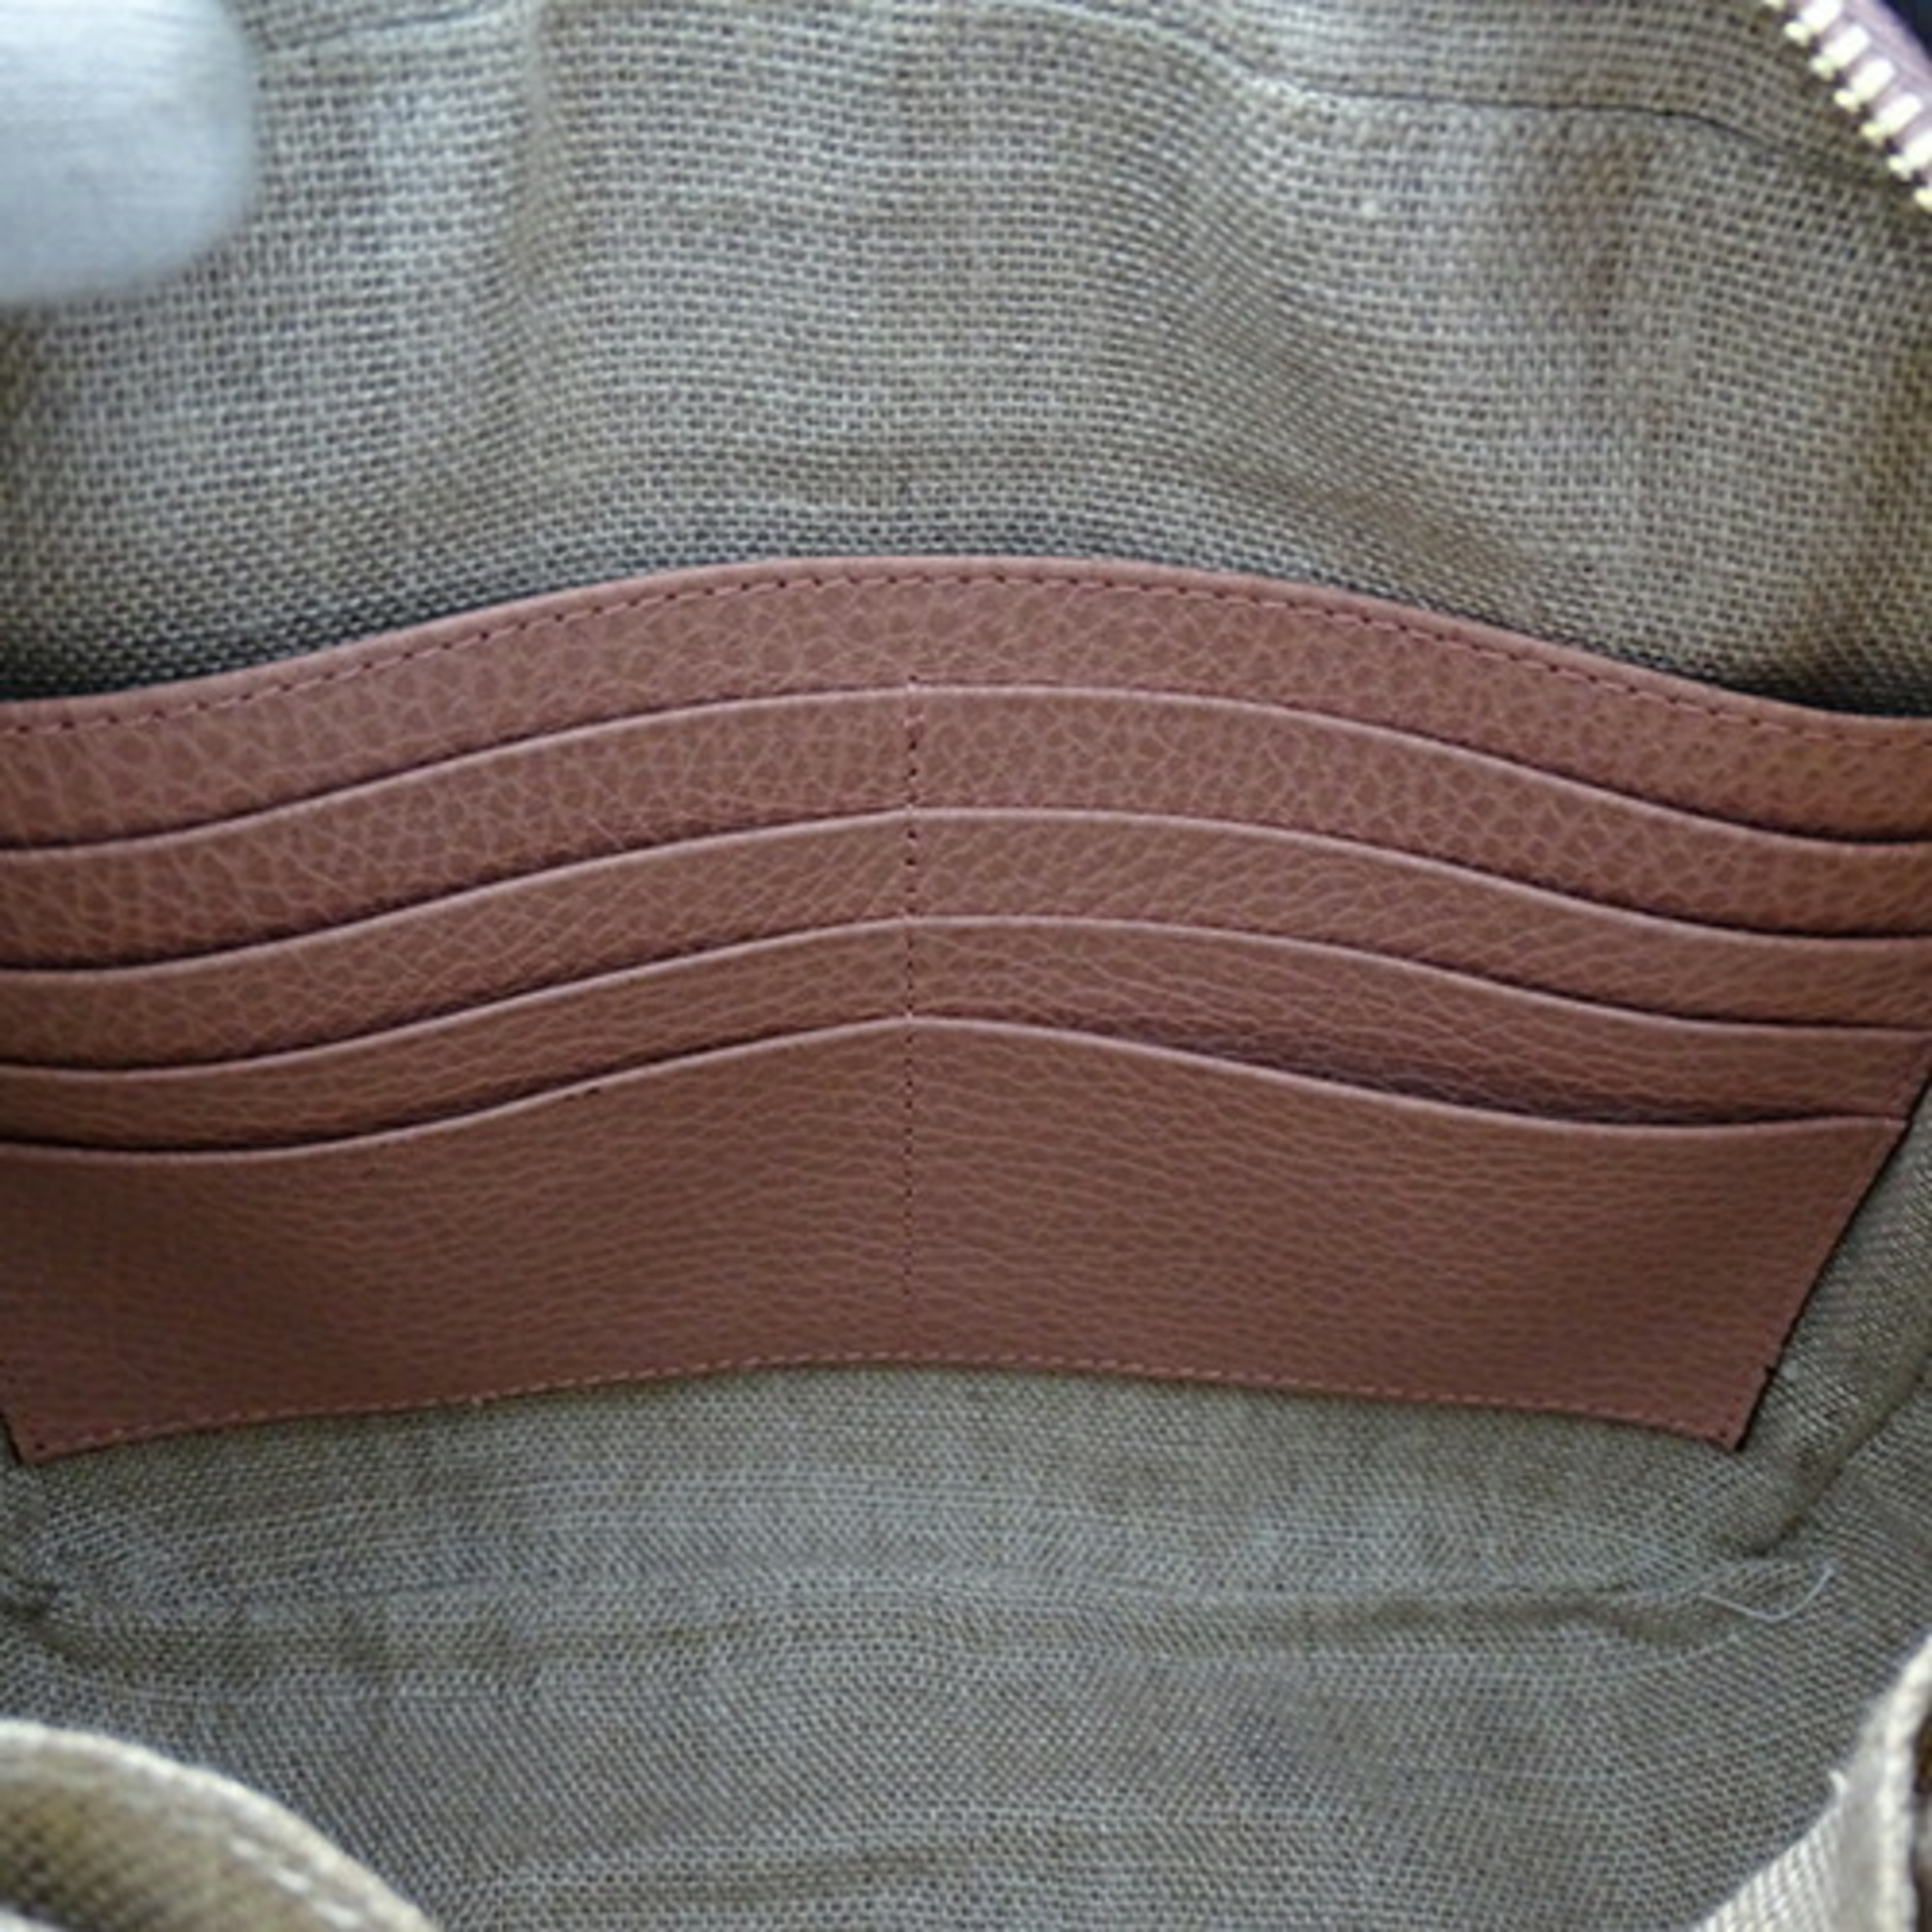 GUCCI Women's Shoulder Bag GG Canvas Beige Pink 449413